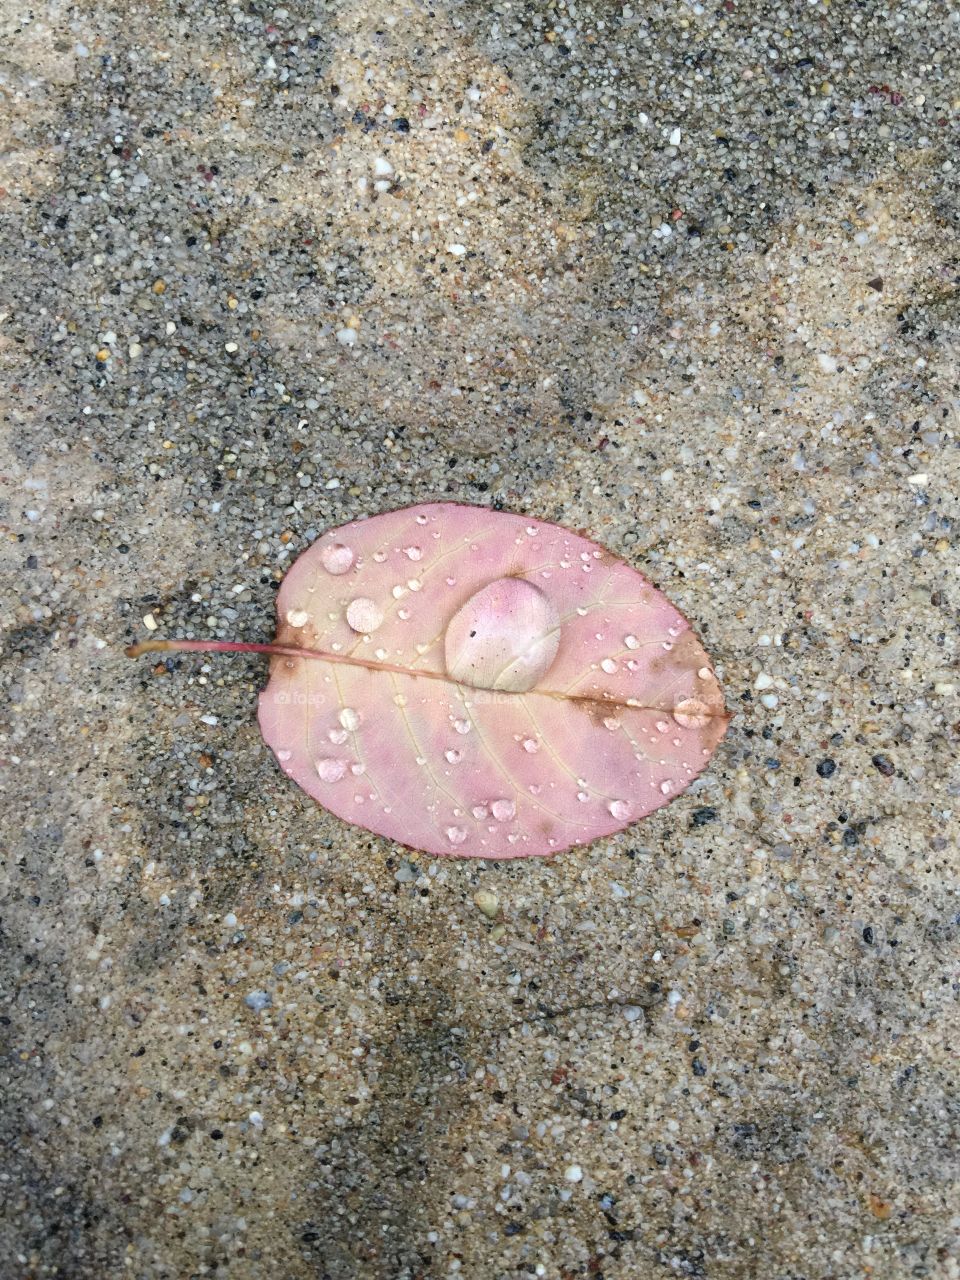 Raindrops on a Fall leaf